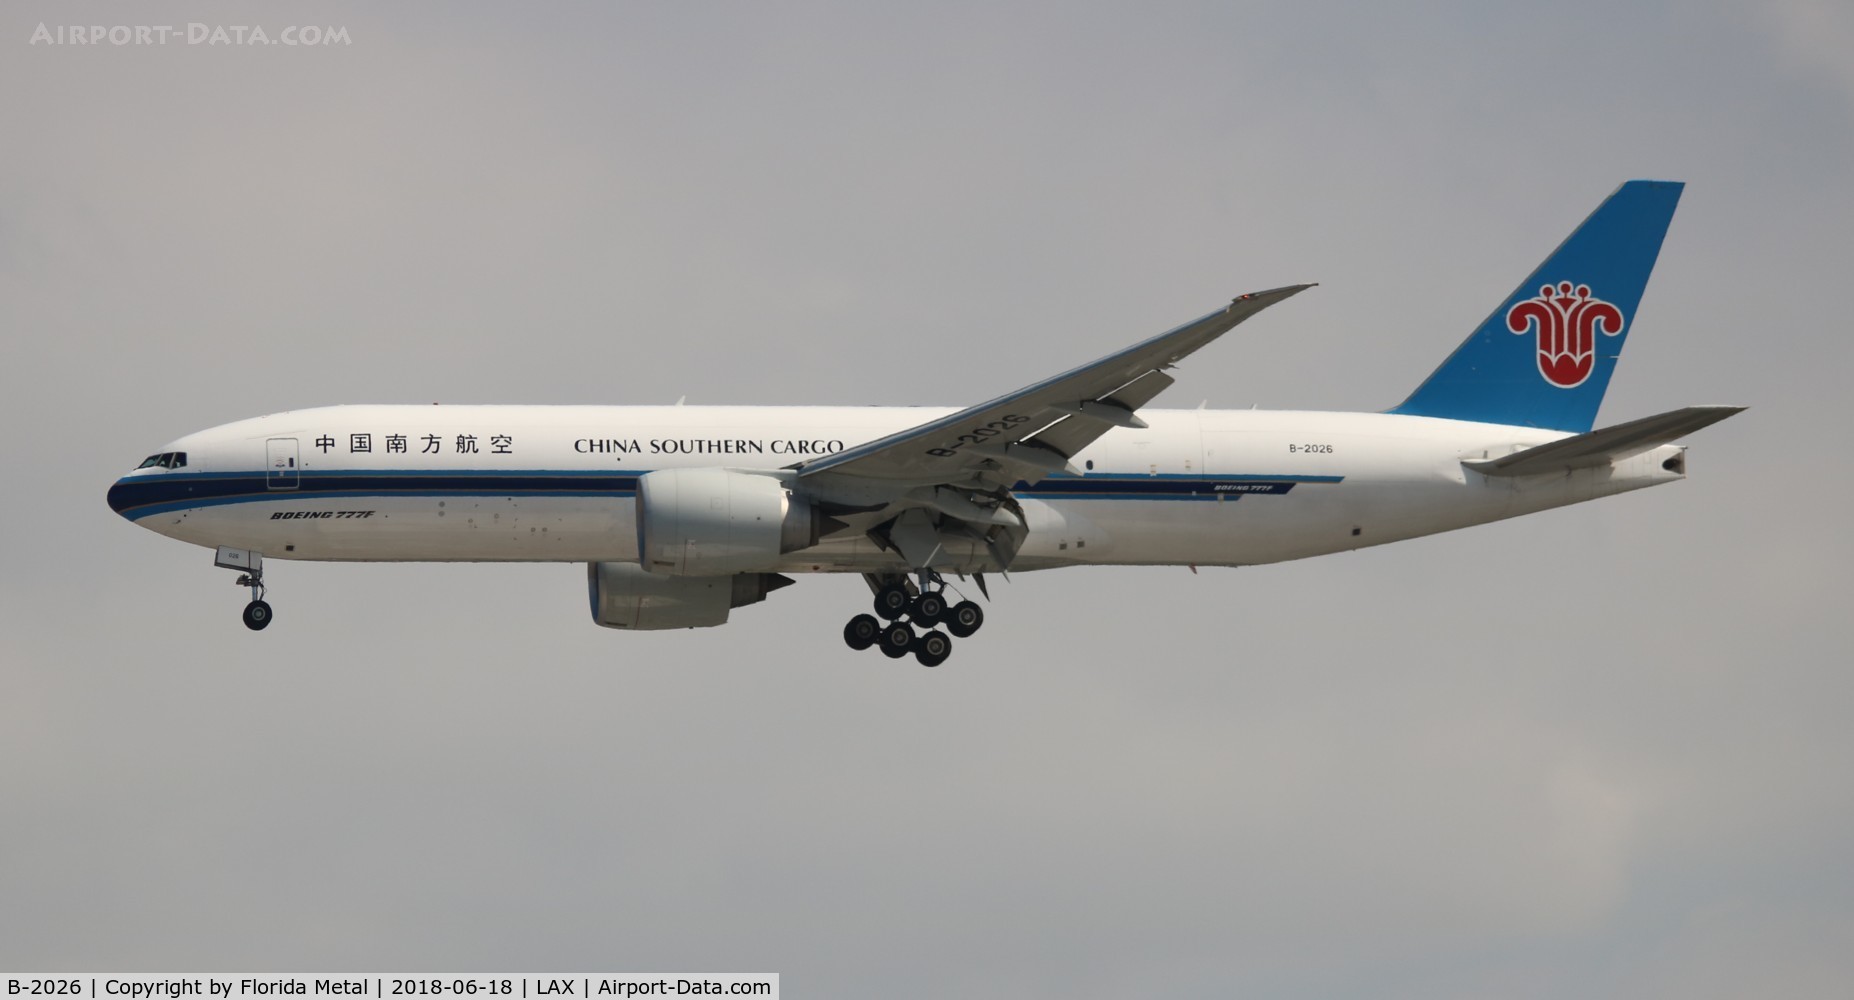 B-2026, 2015 Boeing 777-F1B C/N 41635, China Southern Cargo